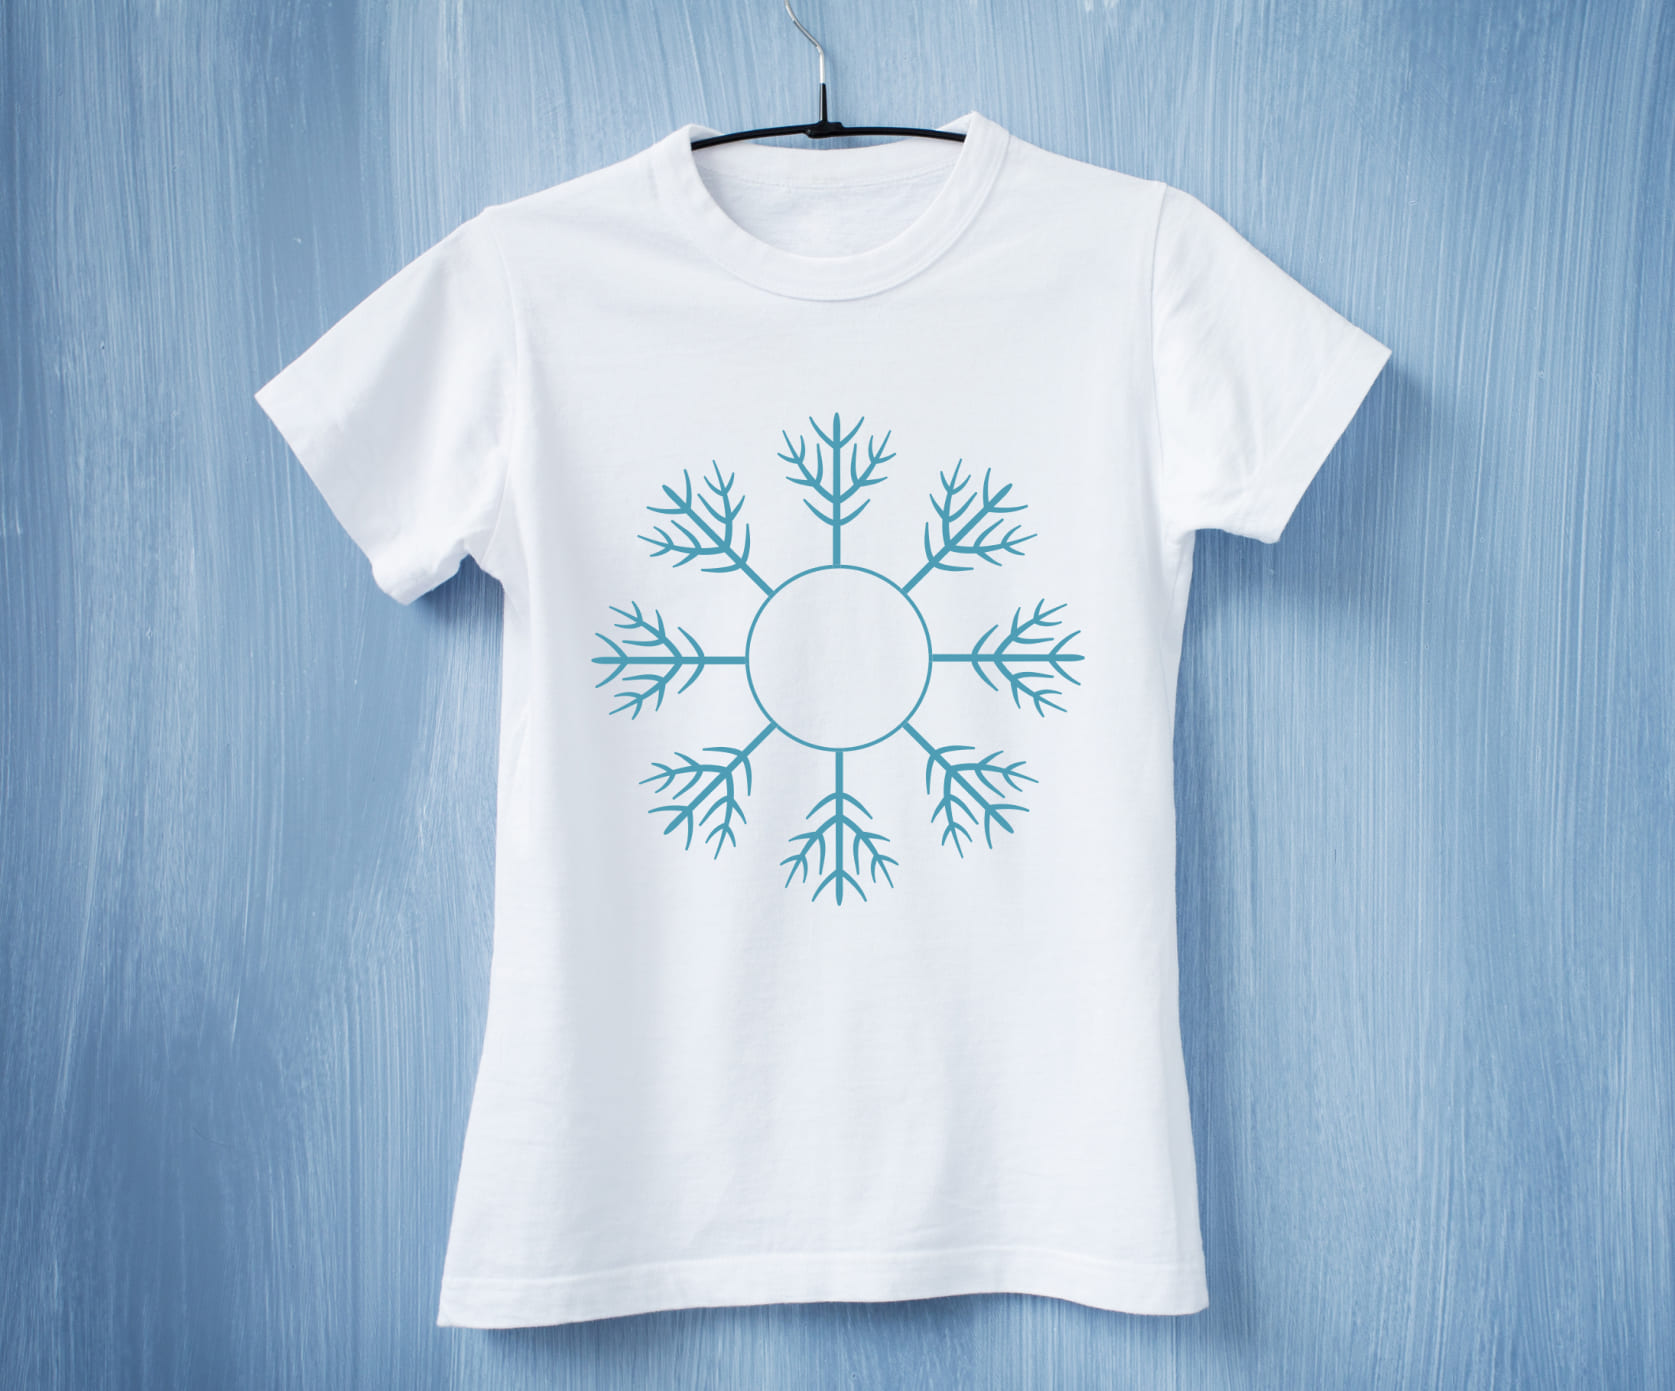 Minimalistic blue snowflake ornament.